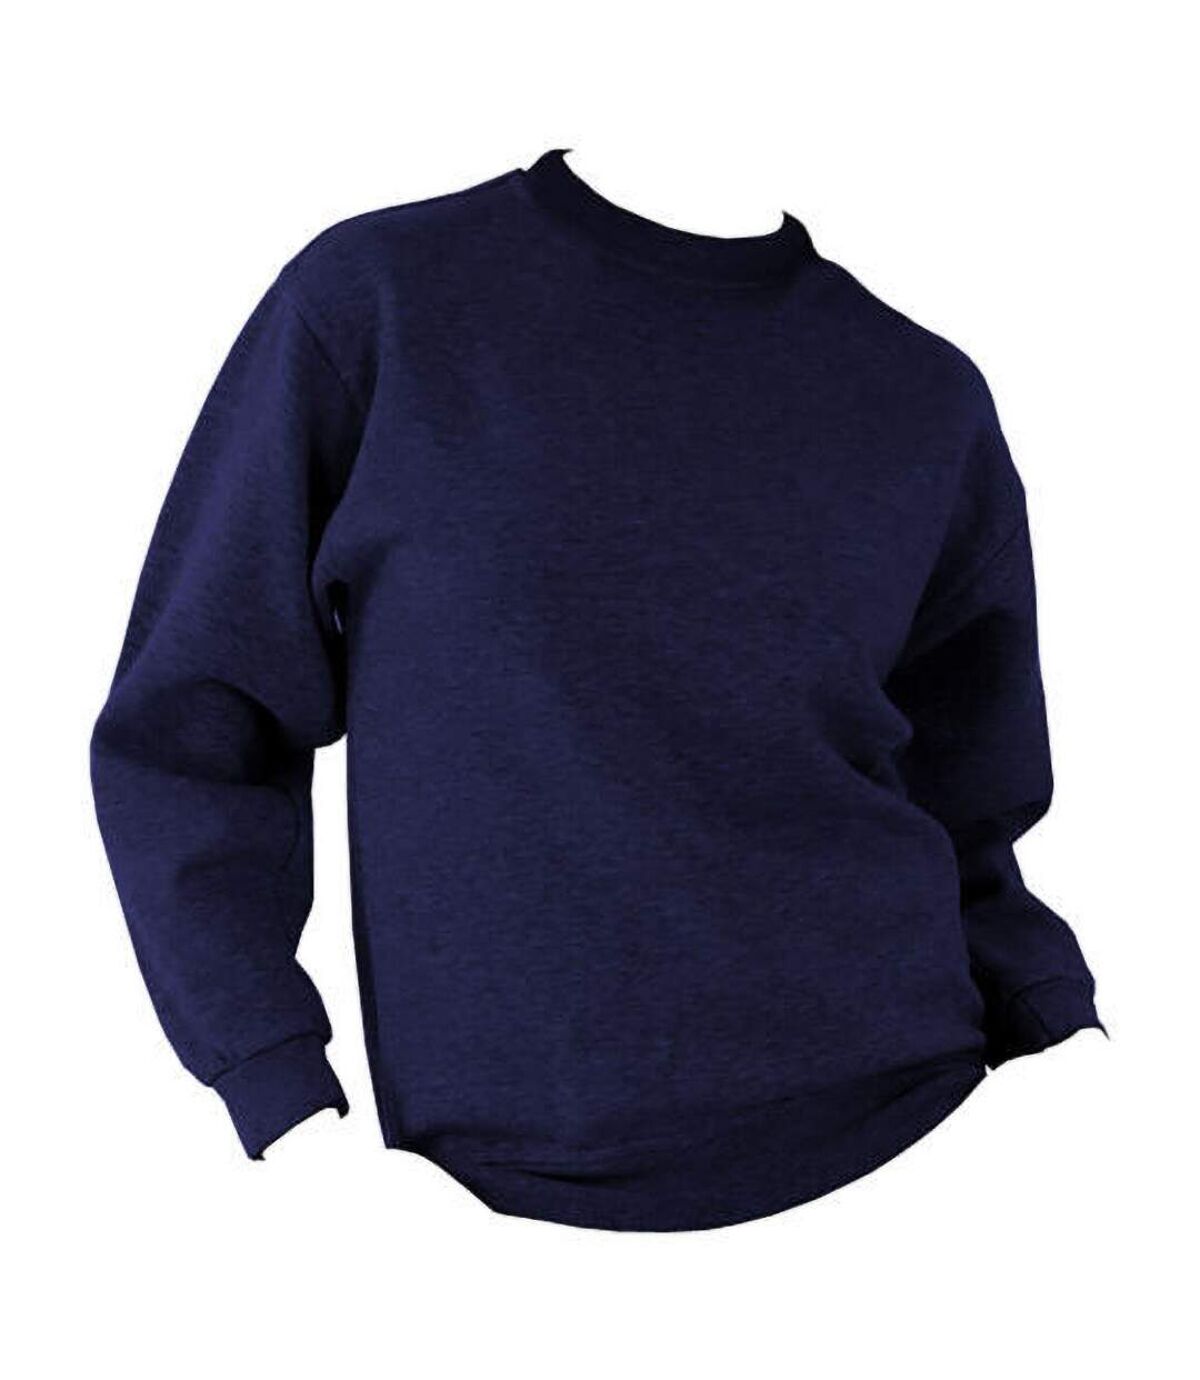 UCC - Sweatshirt uni - Adulte unisexe (Bleu marine) - UTBC1192